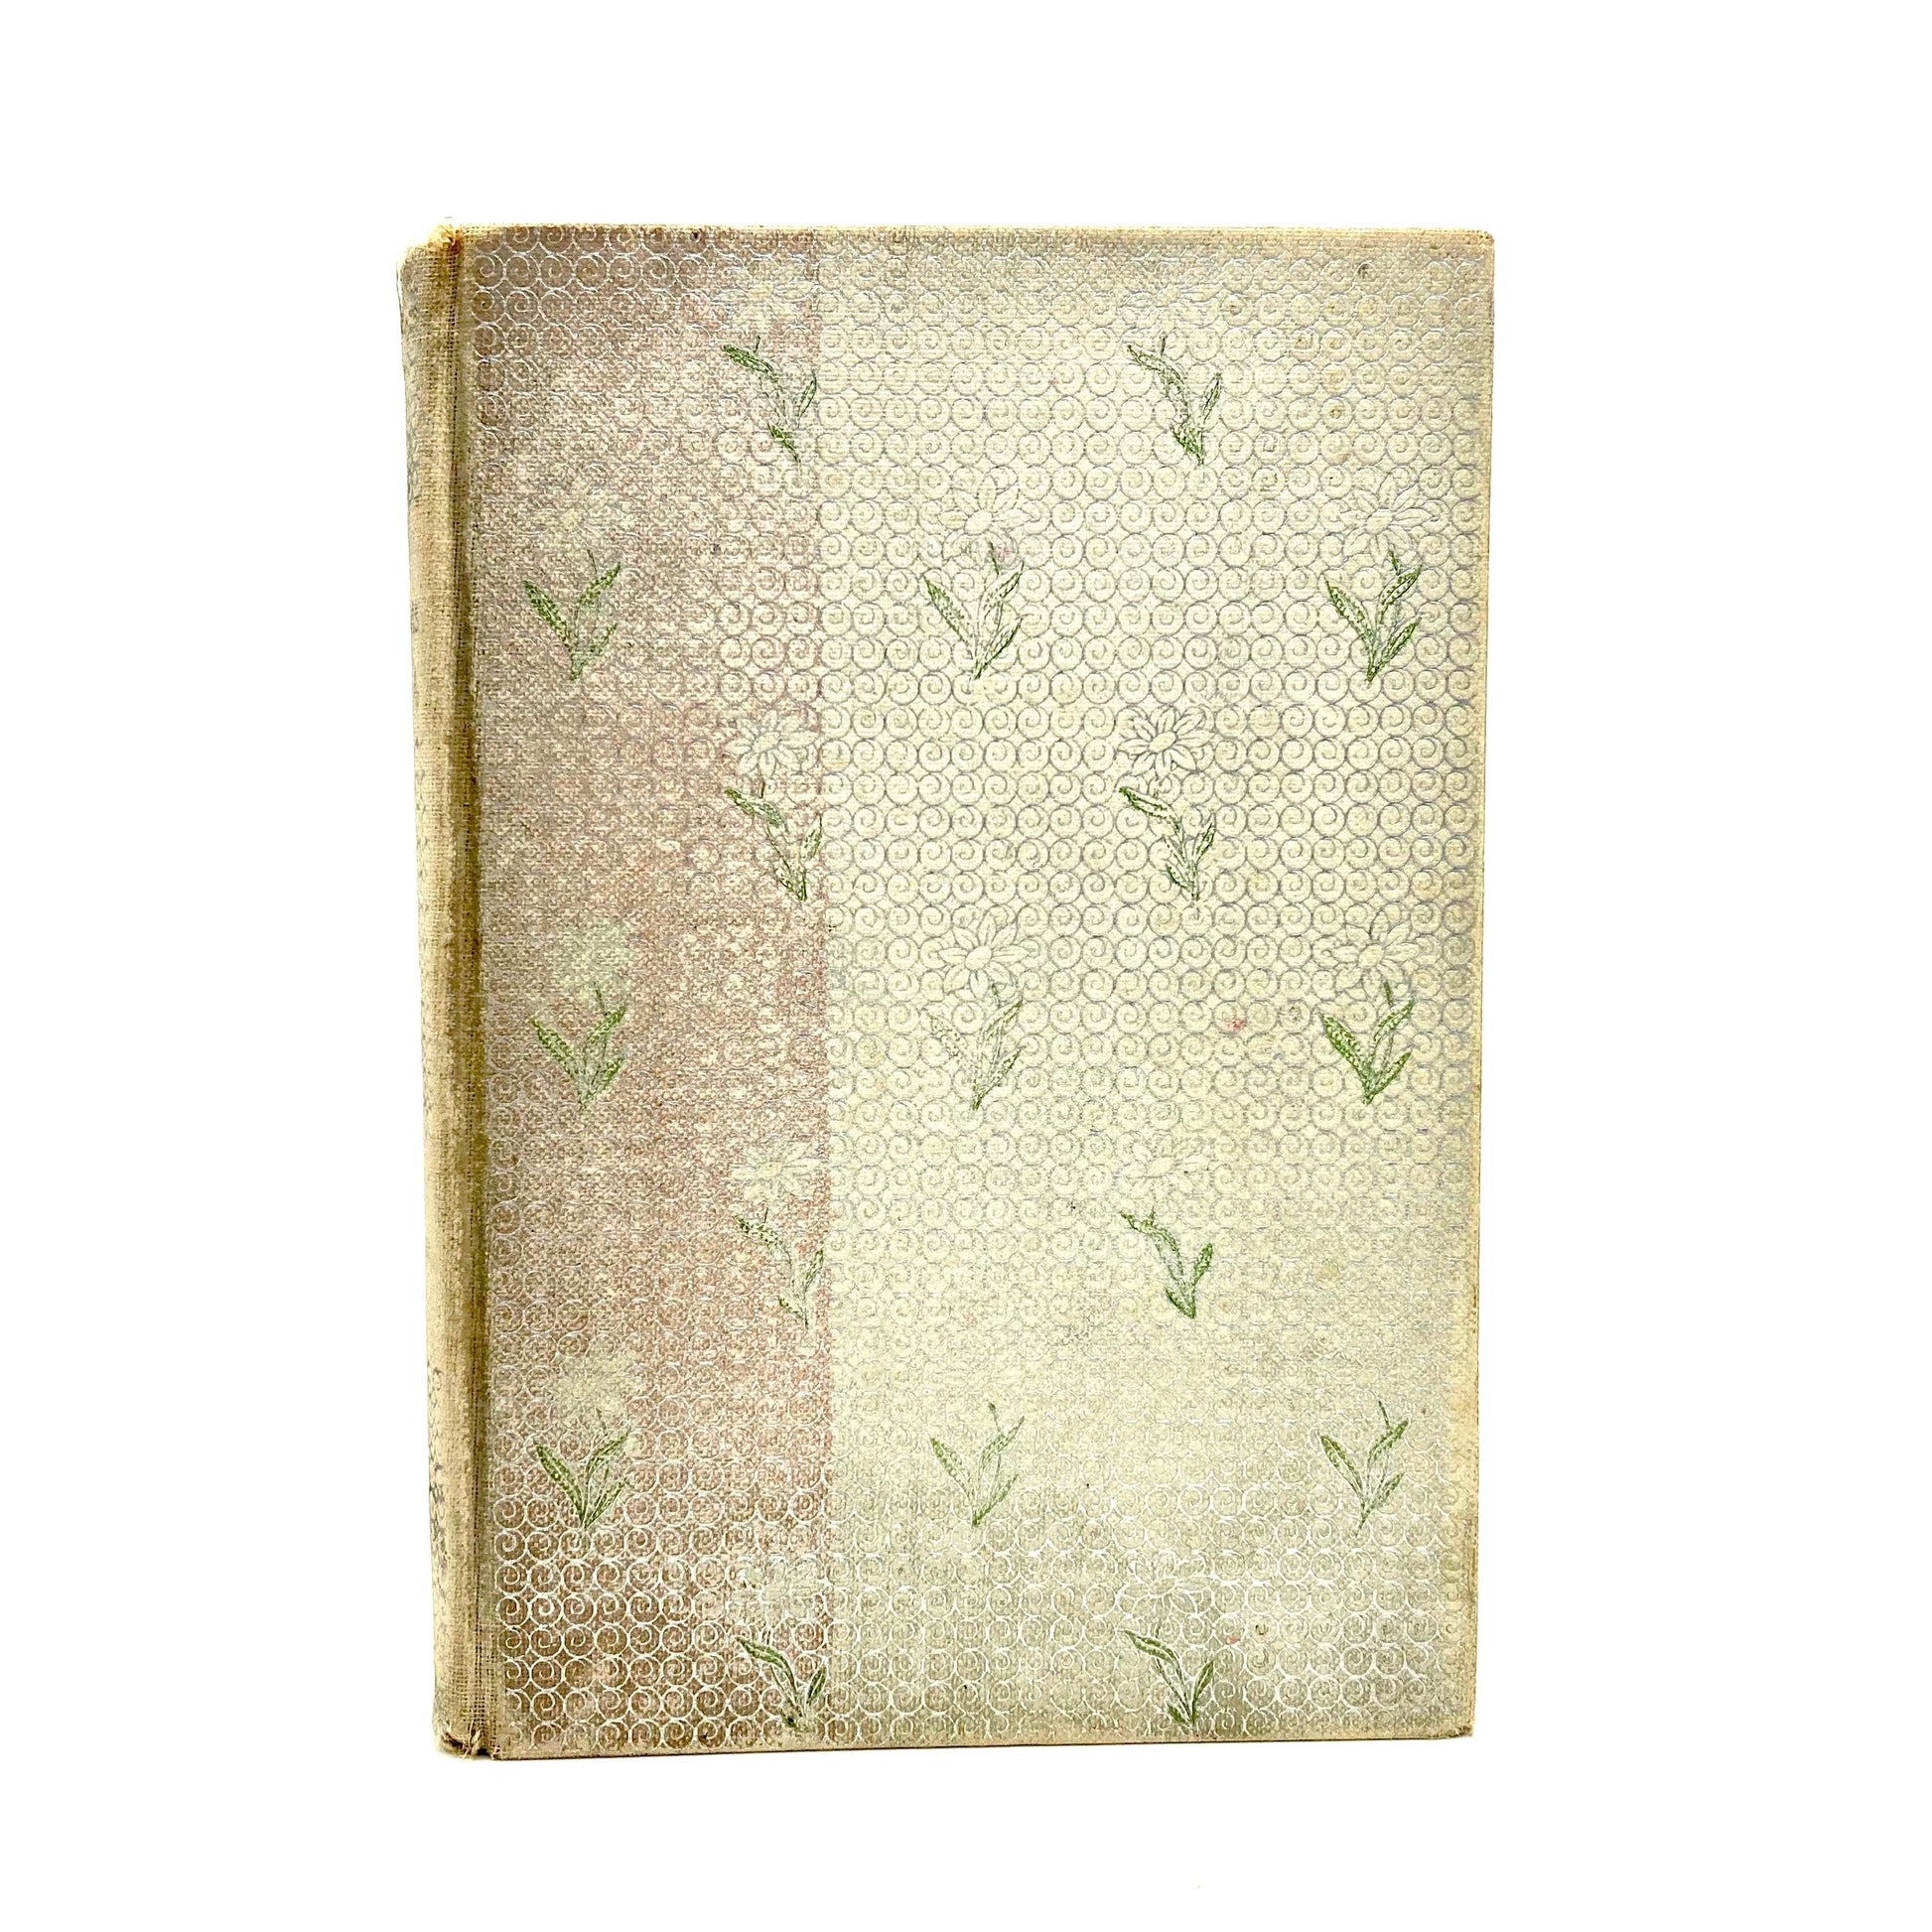 POE, Edgar Allan "Poems" [Henry Altemus, 1897] - Buzz Bookstore